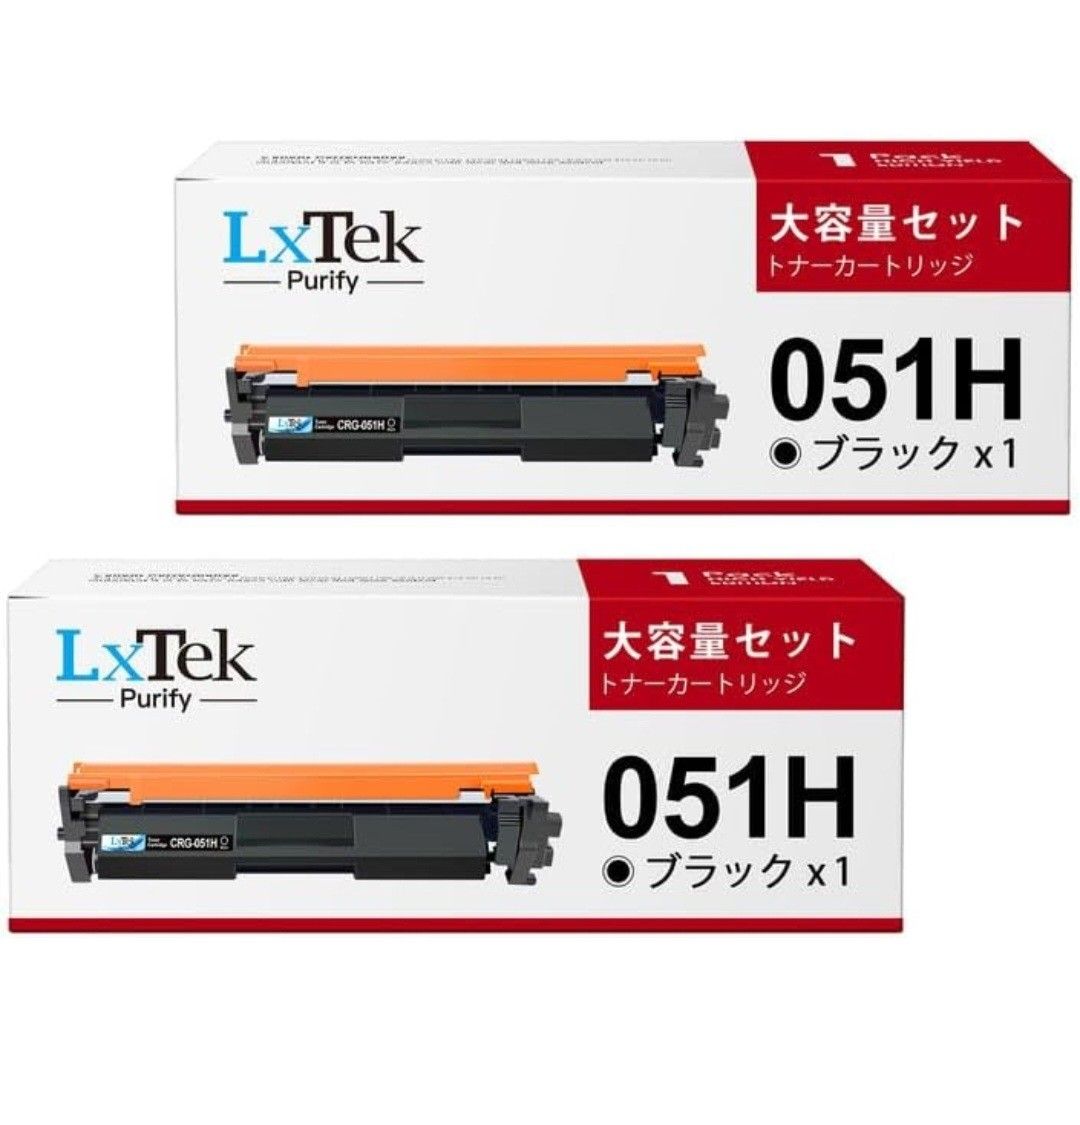 LxTek Purify CRG-051H CRG051H 互換トナー キャノン 対応 カートリッジ051 4色 canon 用